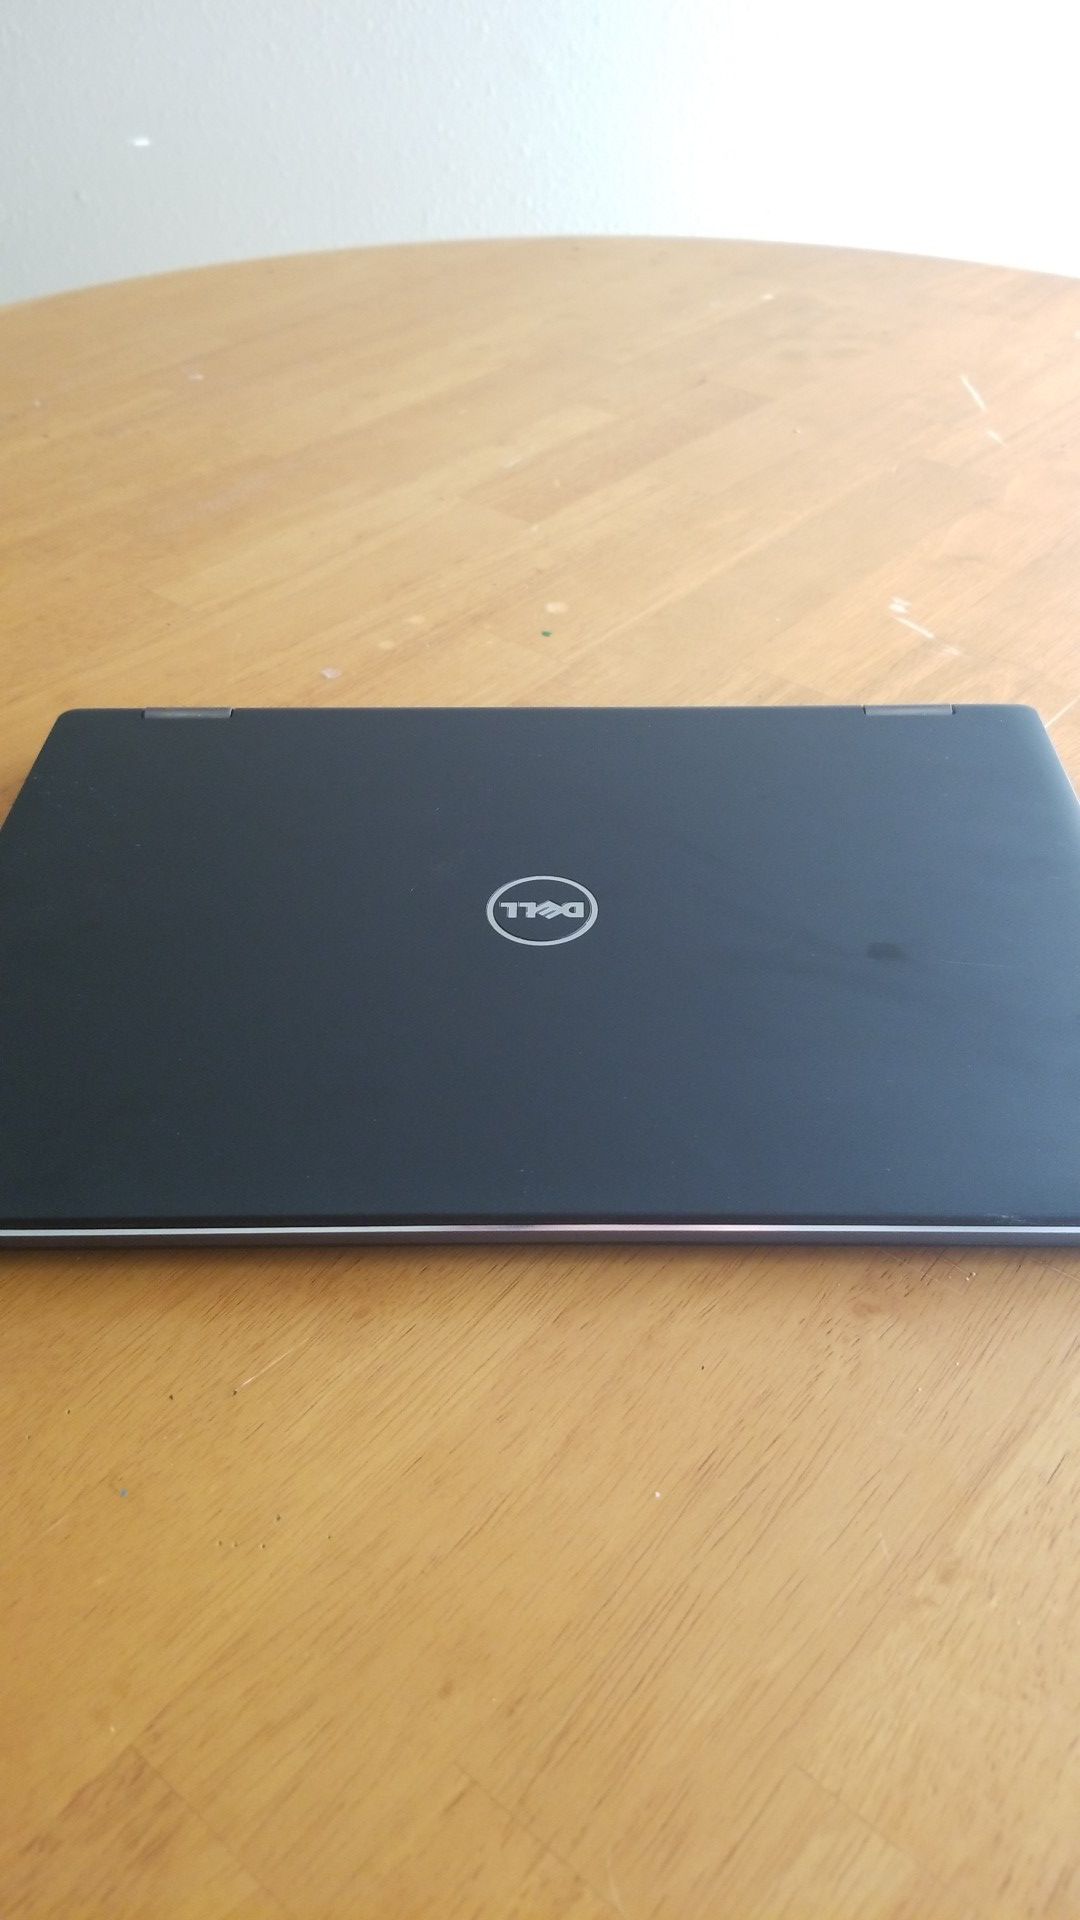 Dell Inspirion 13-7353 touchscreen laptop